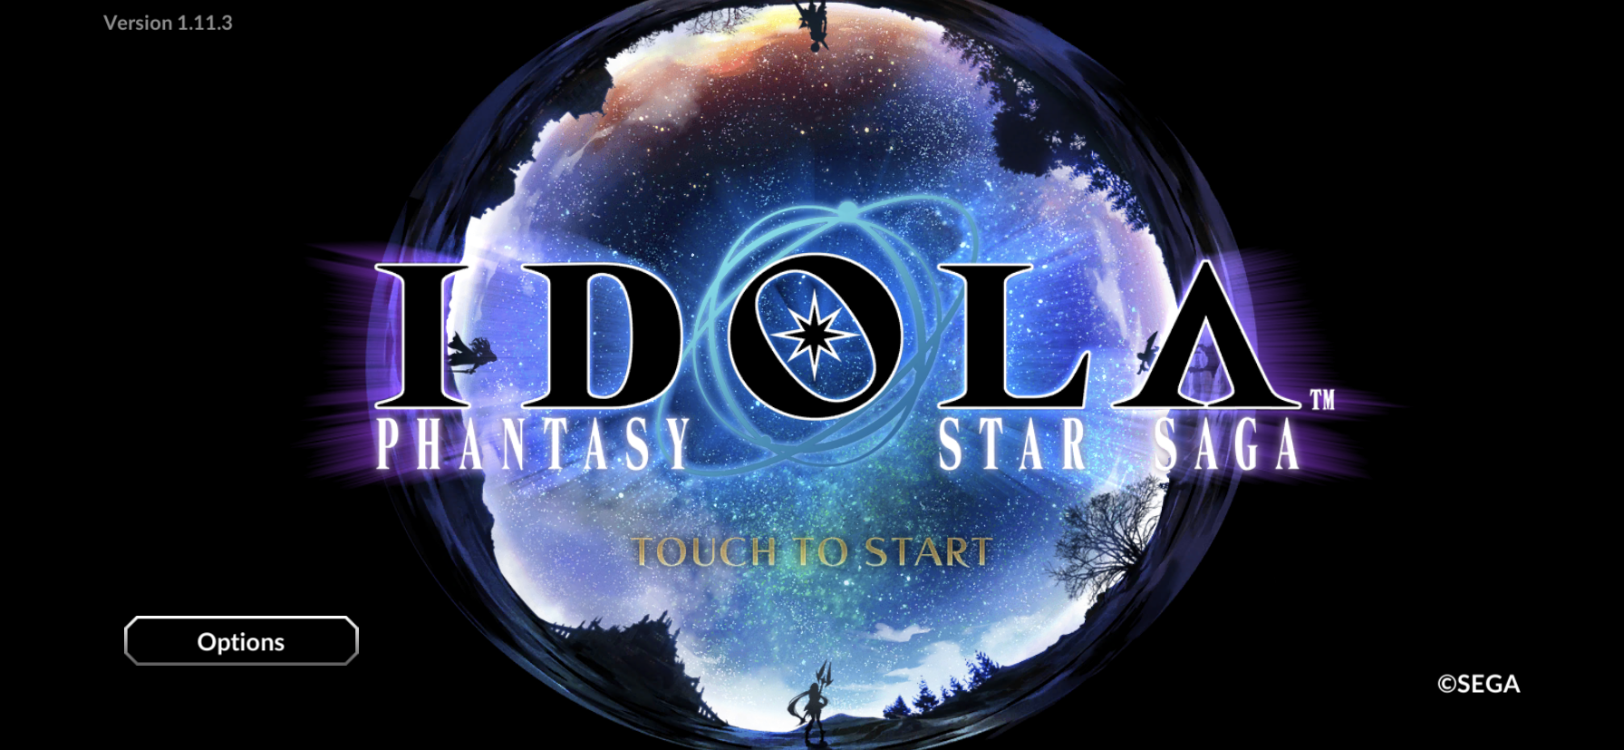 Idola Phantasy Star Saga Mobile Game Review